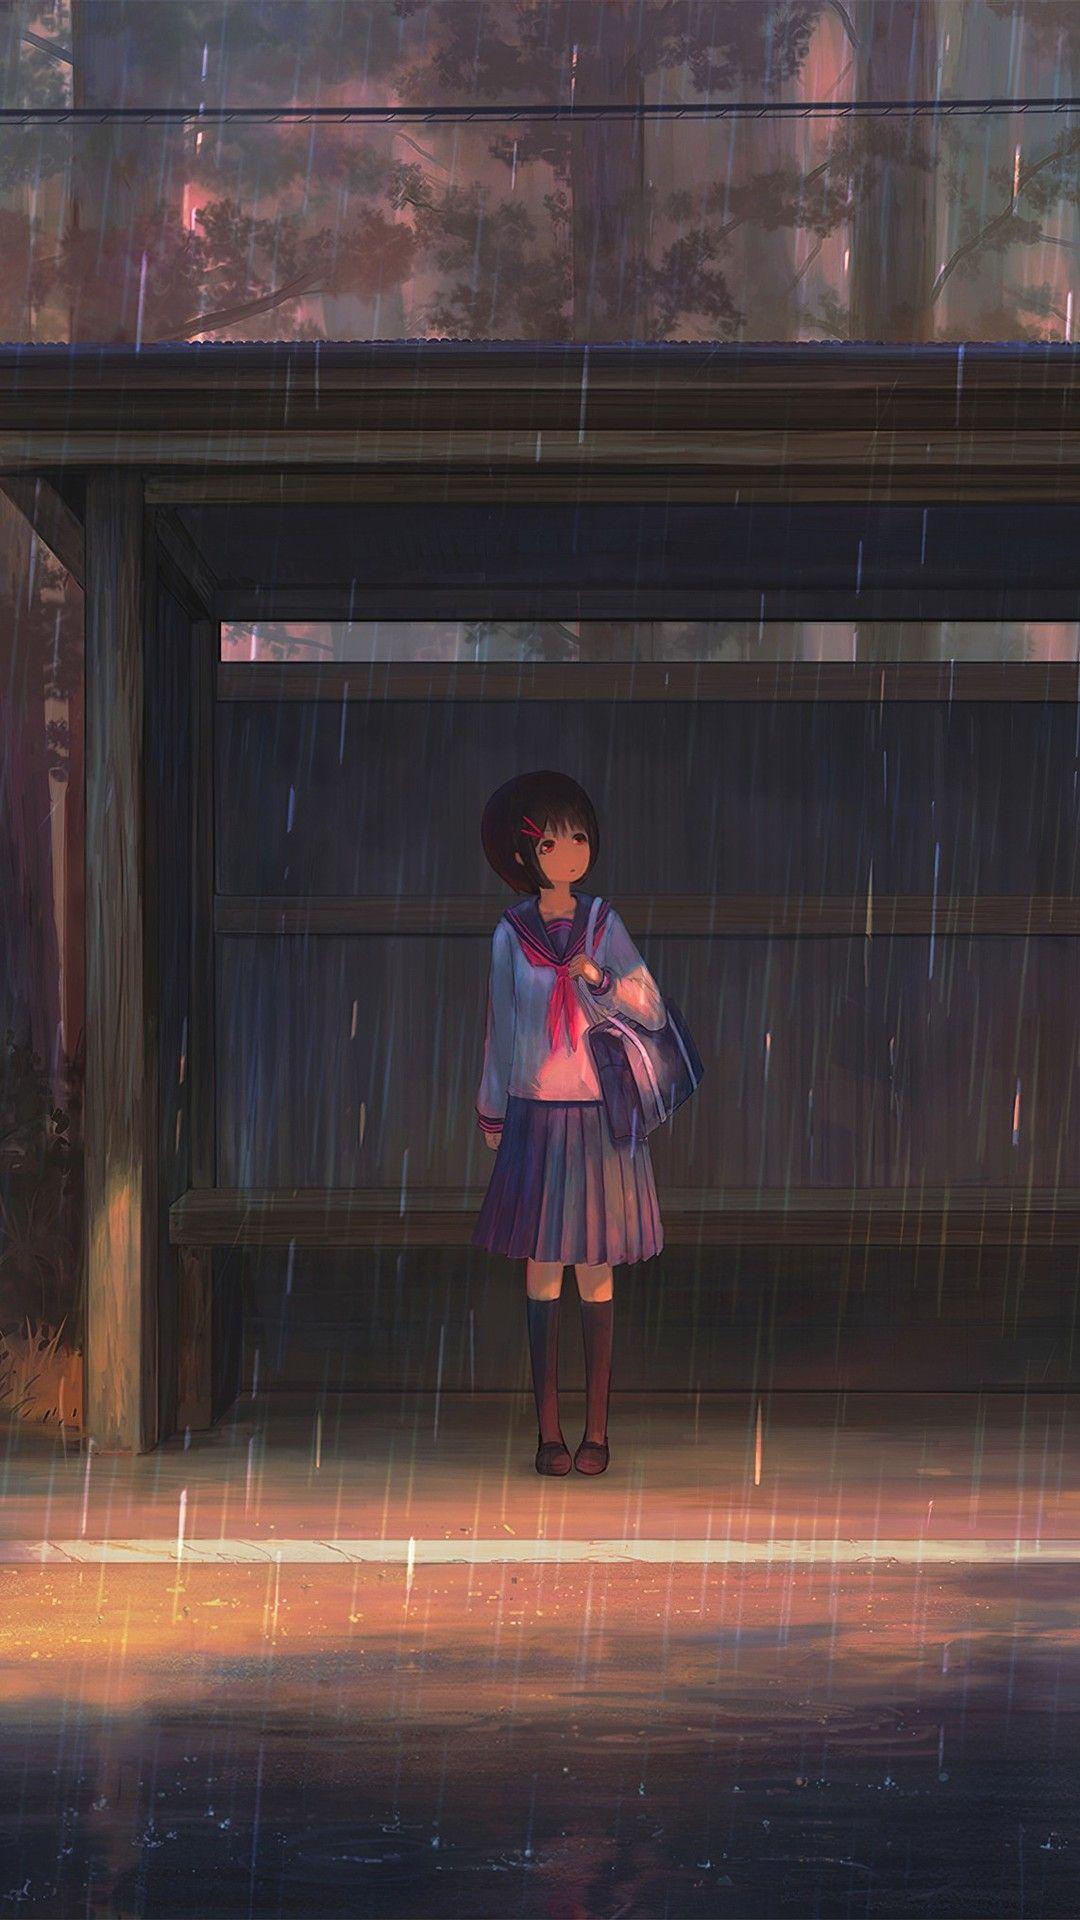 Rain Anime Girl 4K Wallpapers - Top Free Rain Anime Girl 4K Backgrounds